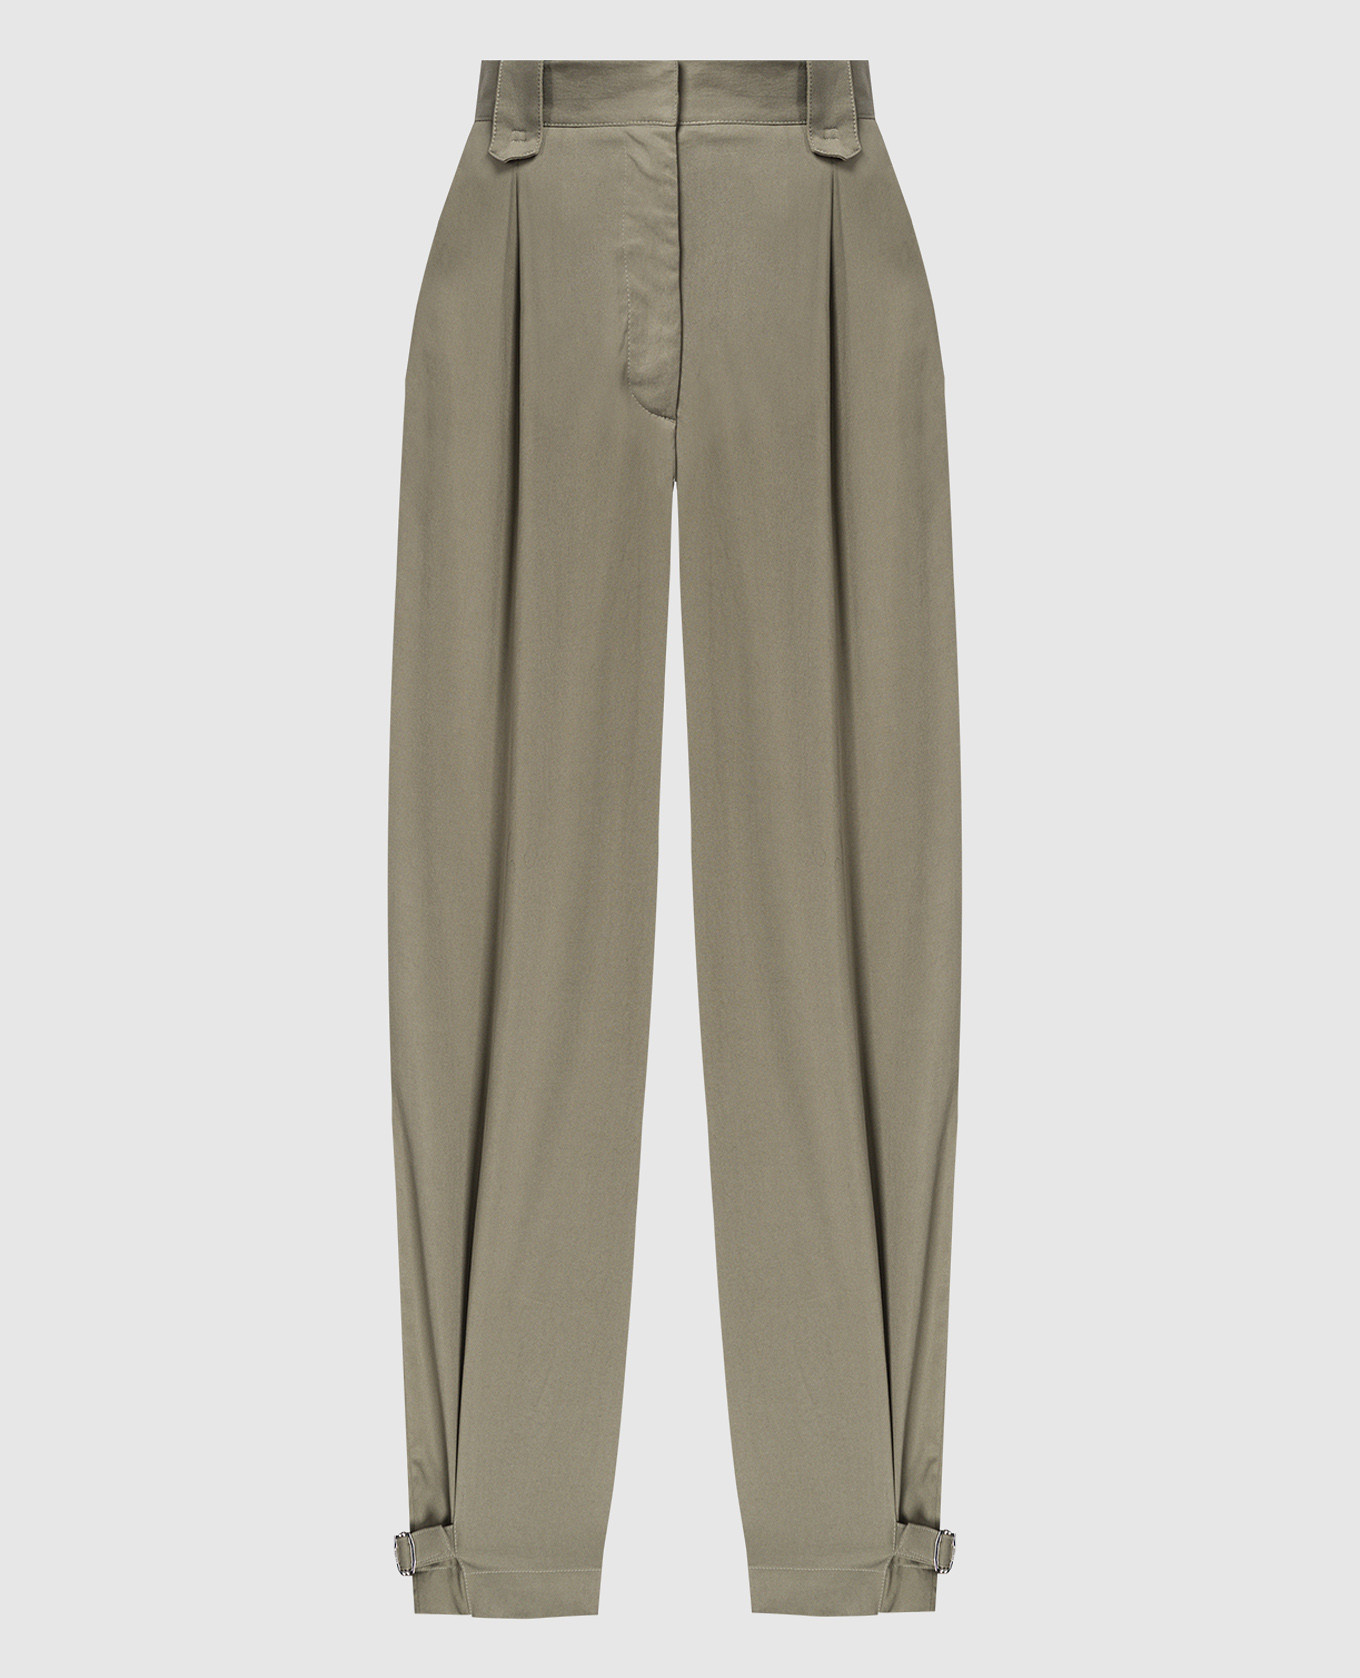 Karly-NTF khaki pants